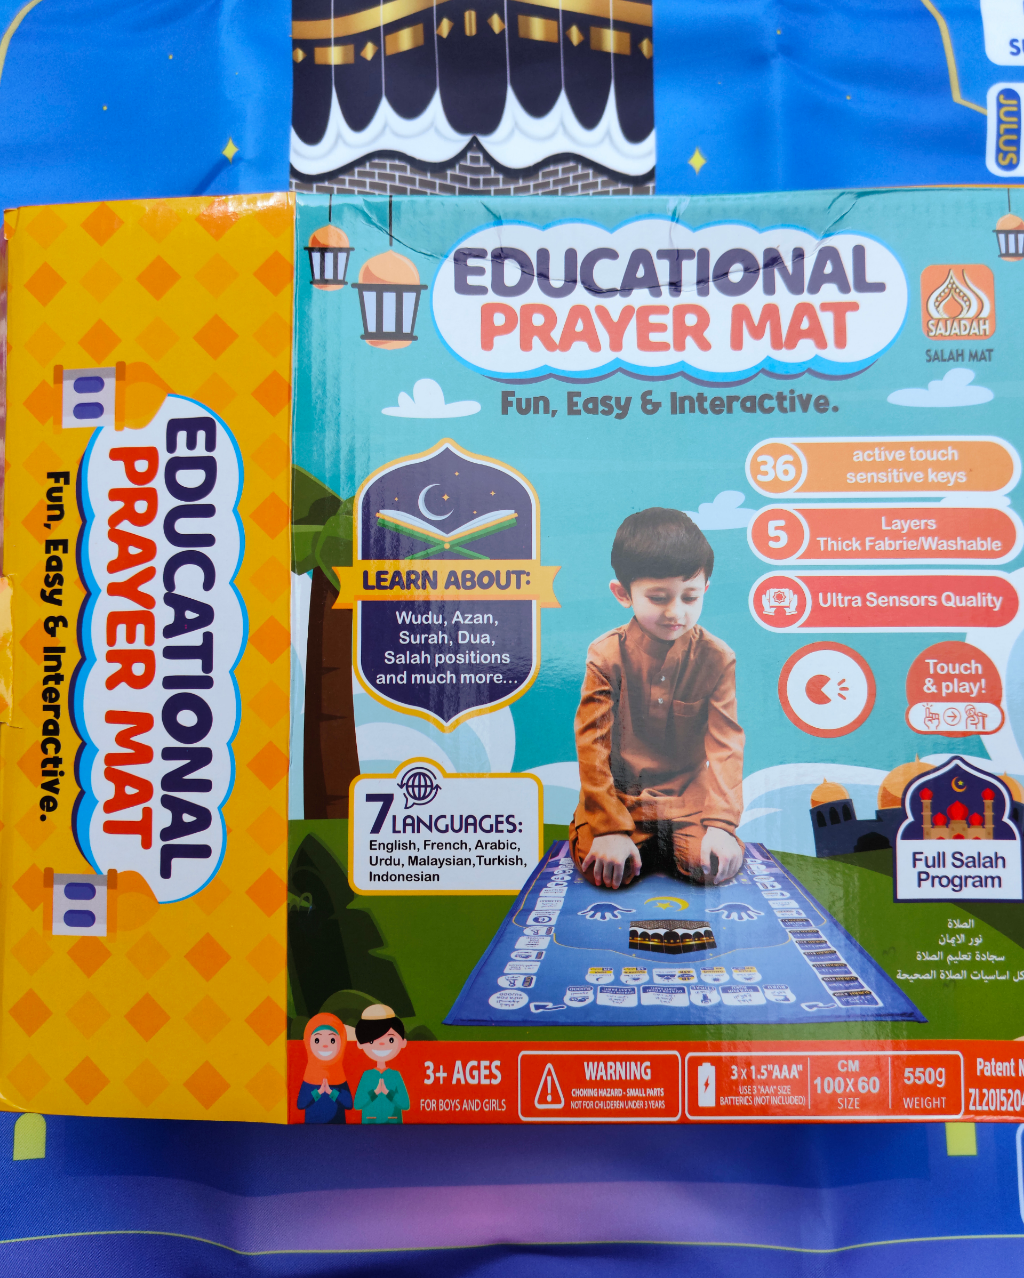 My salah mat educational prayer mat